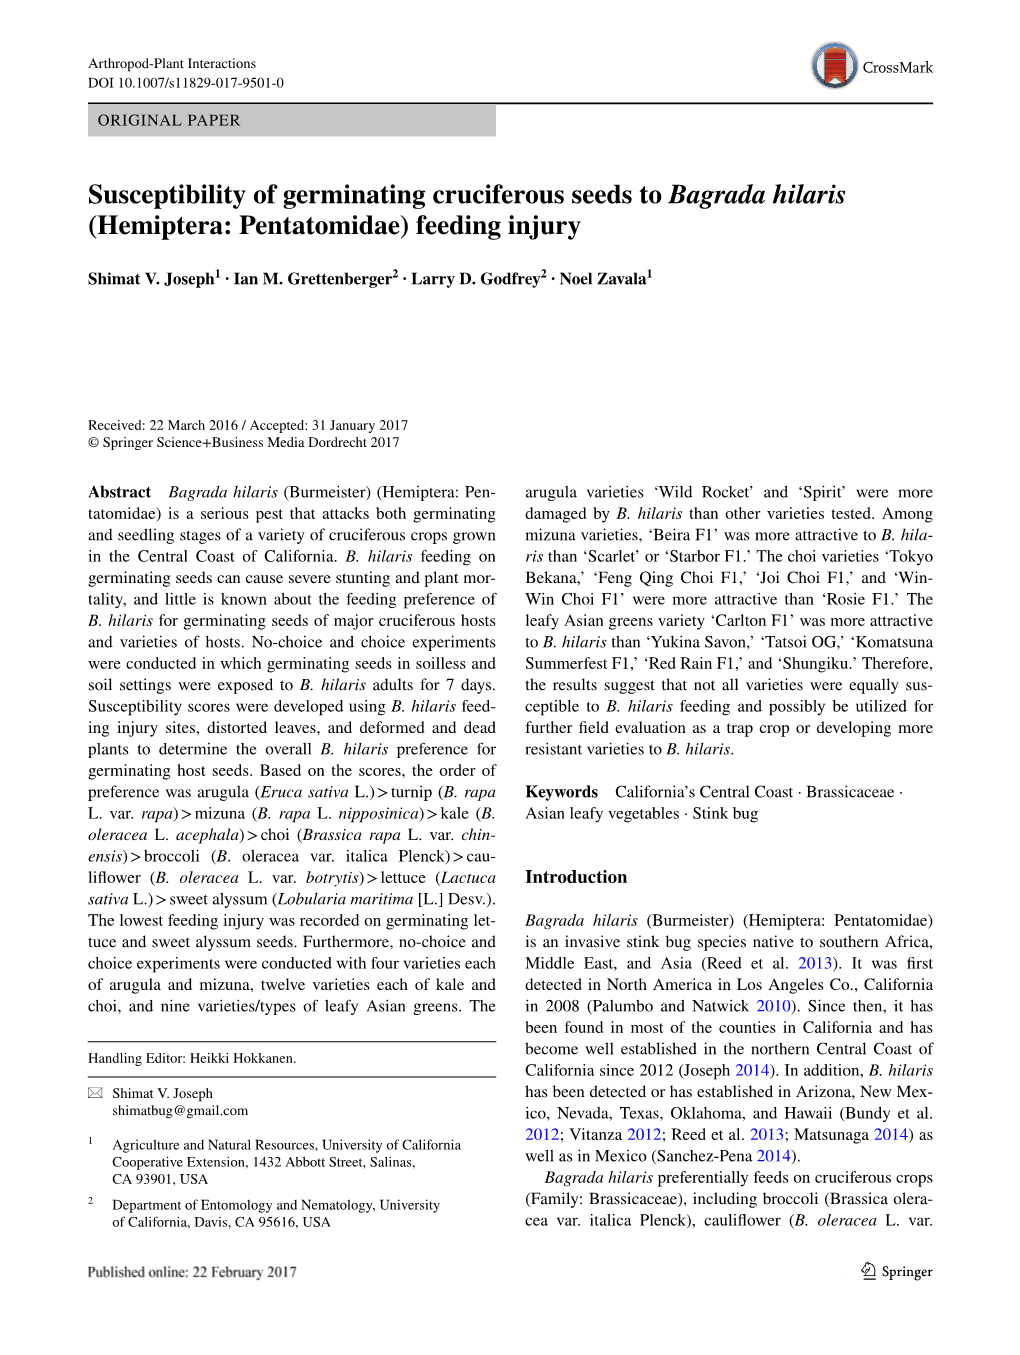 Susceptibility of Germinating Cruciferous Seeds to Bagrada Hilaris (Hemiptera: Pentatomidae) Feeding Injury